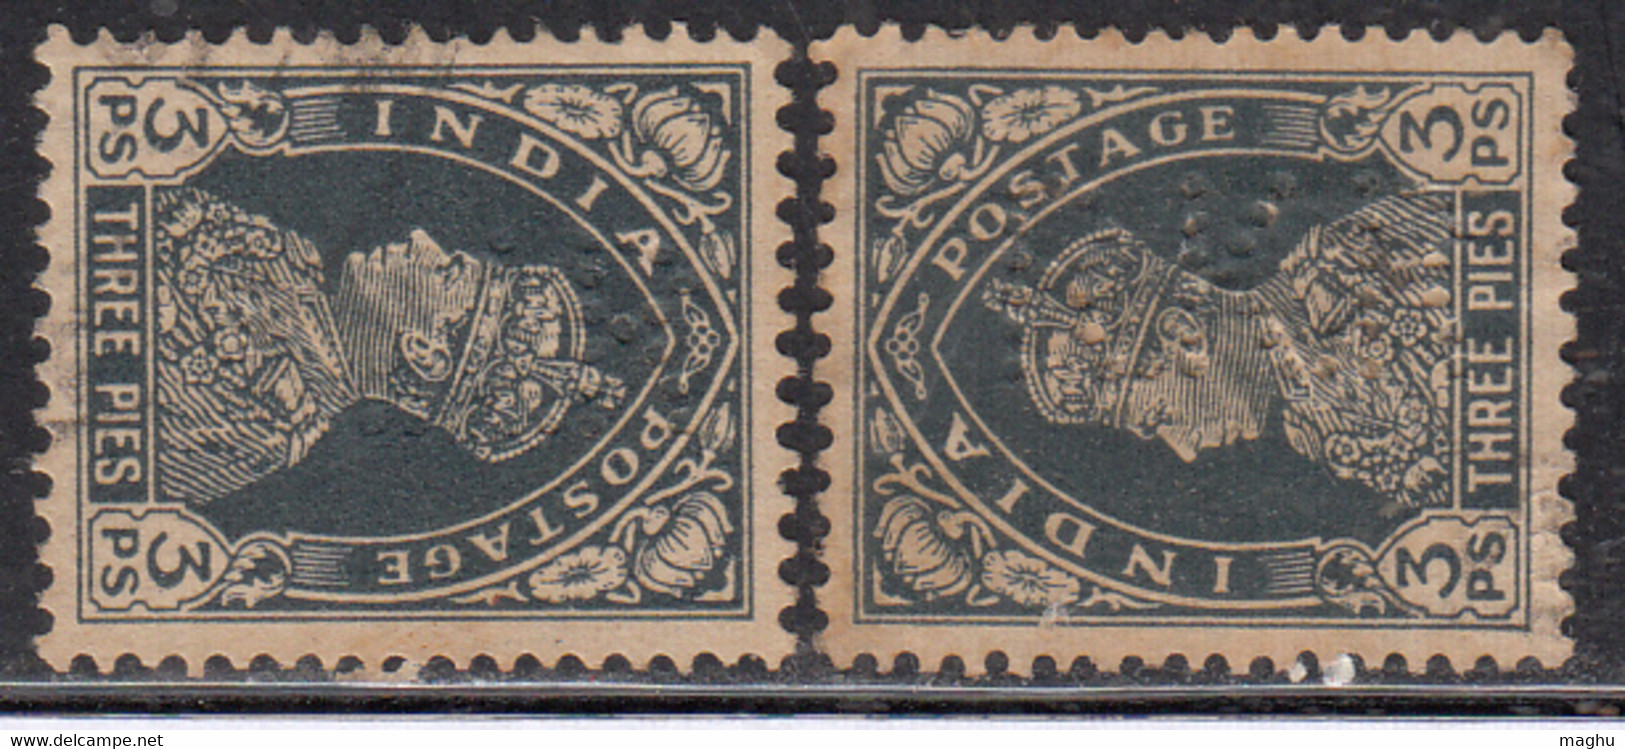 2 Perfin, Perfins, British India 1937 Used - Perfins